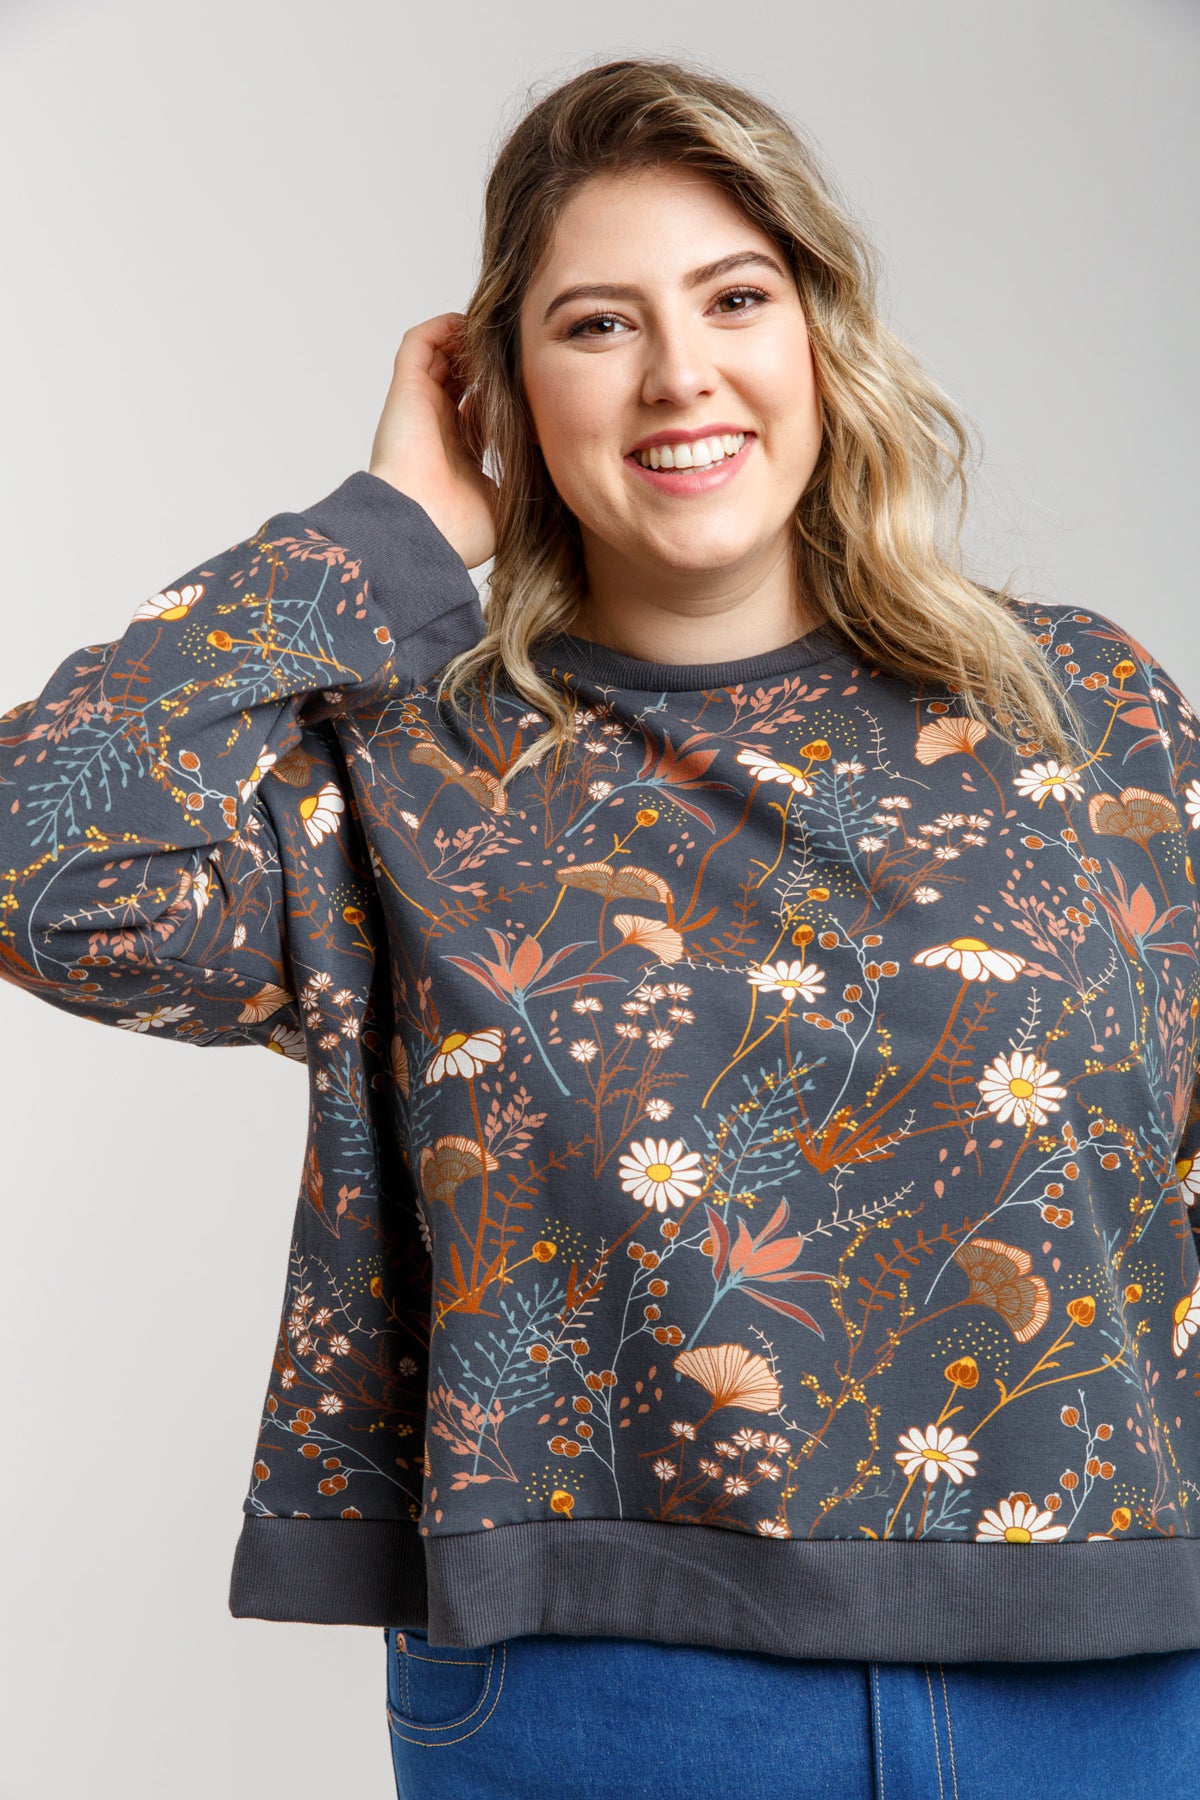 Jarrah Curve sweater - Megan Nielsen